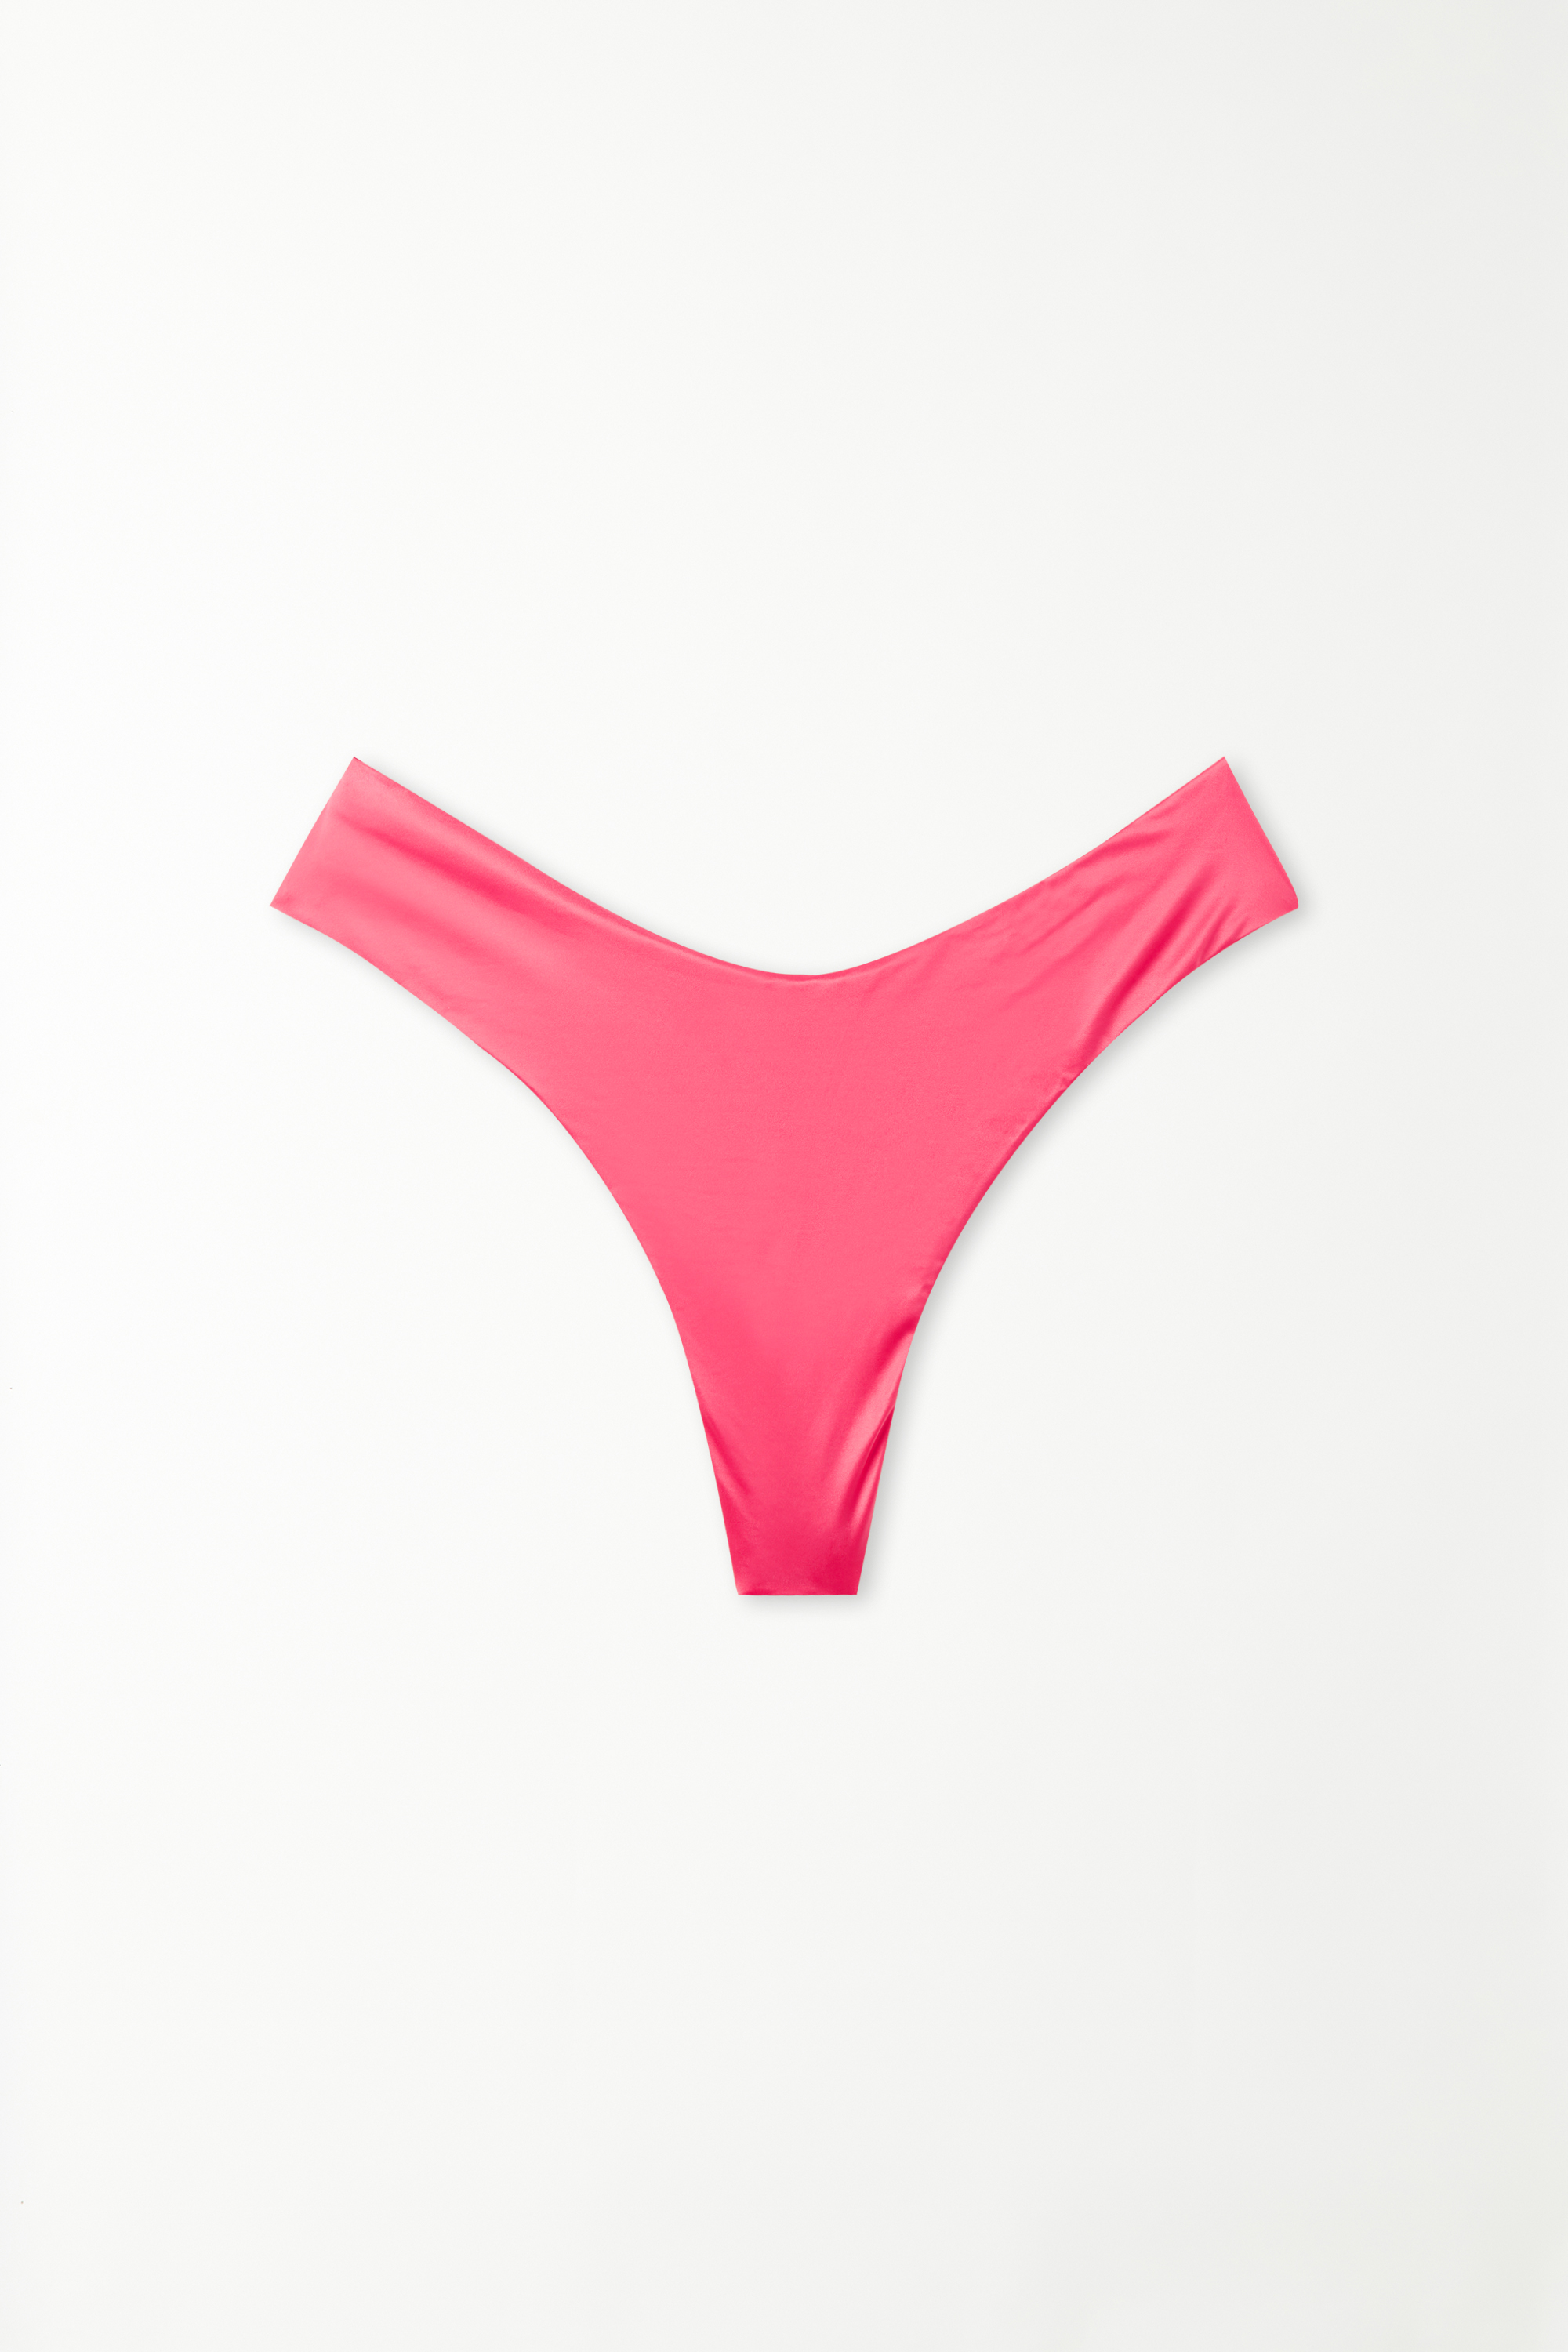 Shiny Summer Pink Rounded High-Cut Brazilian Bikini Bottoms